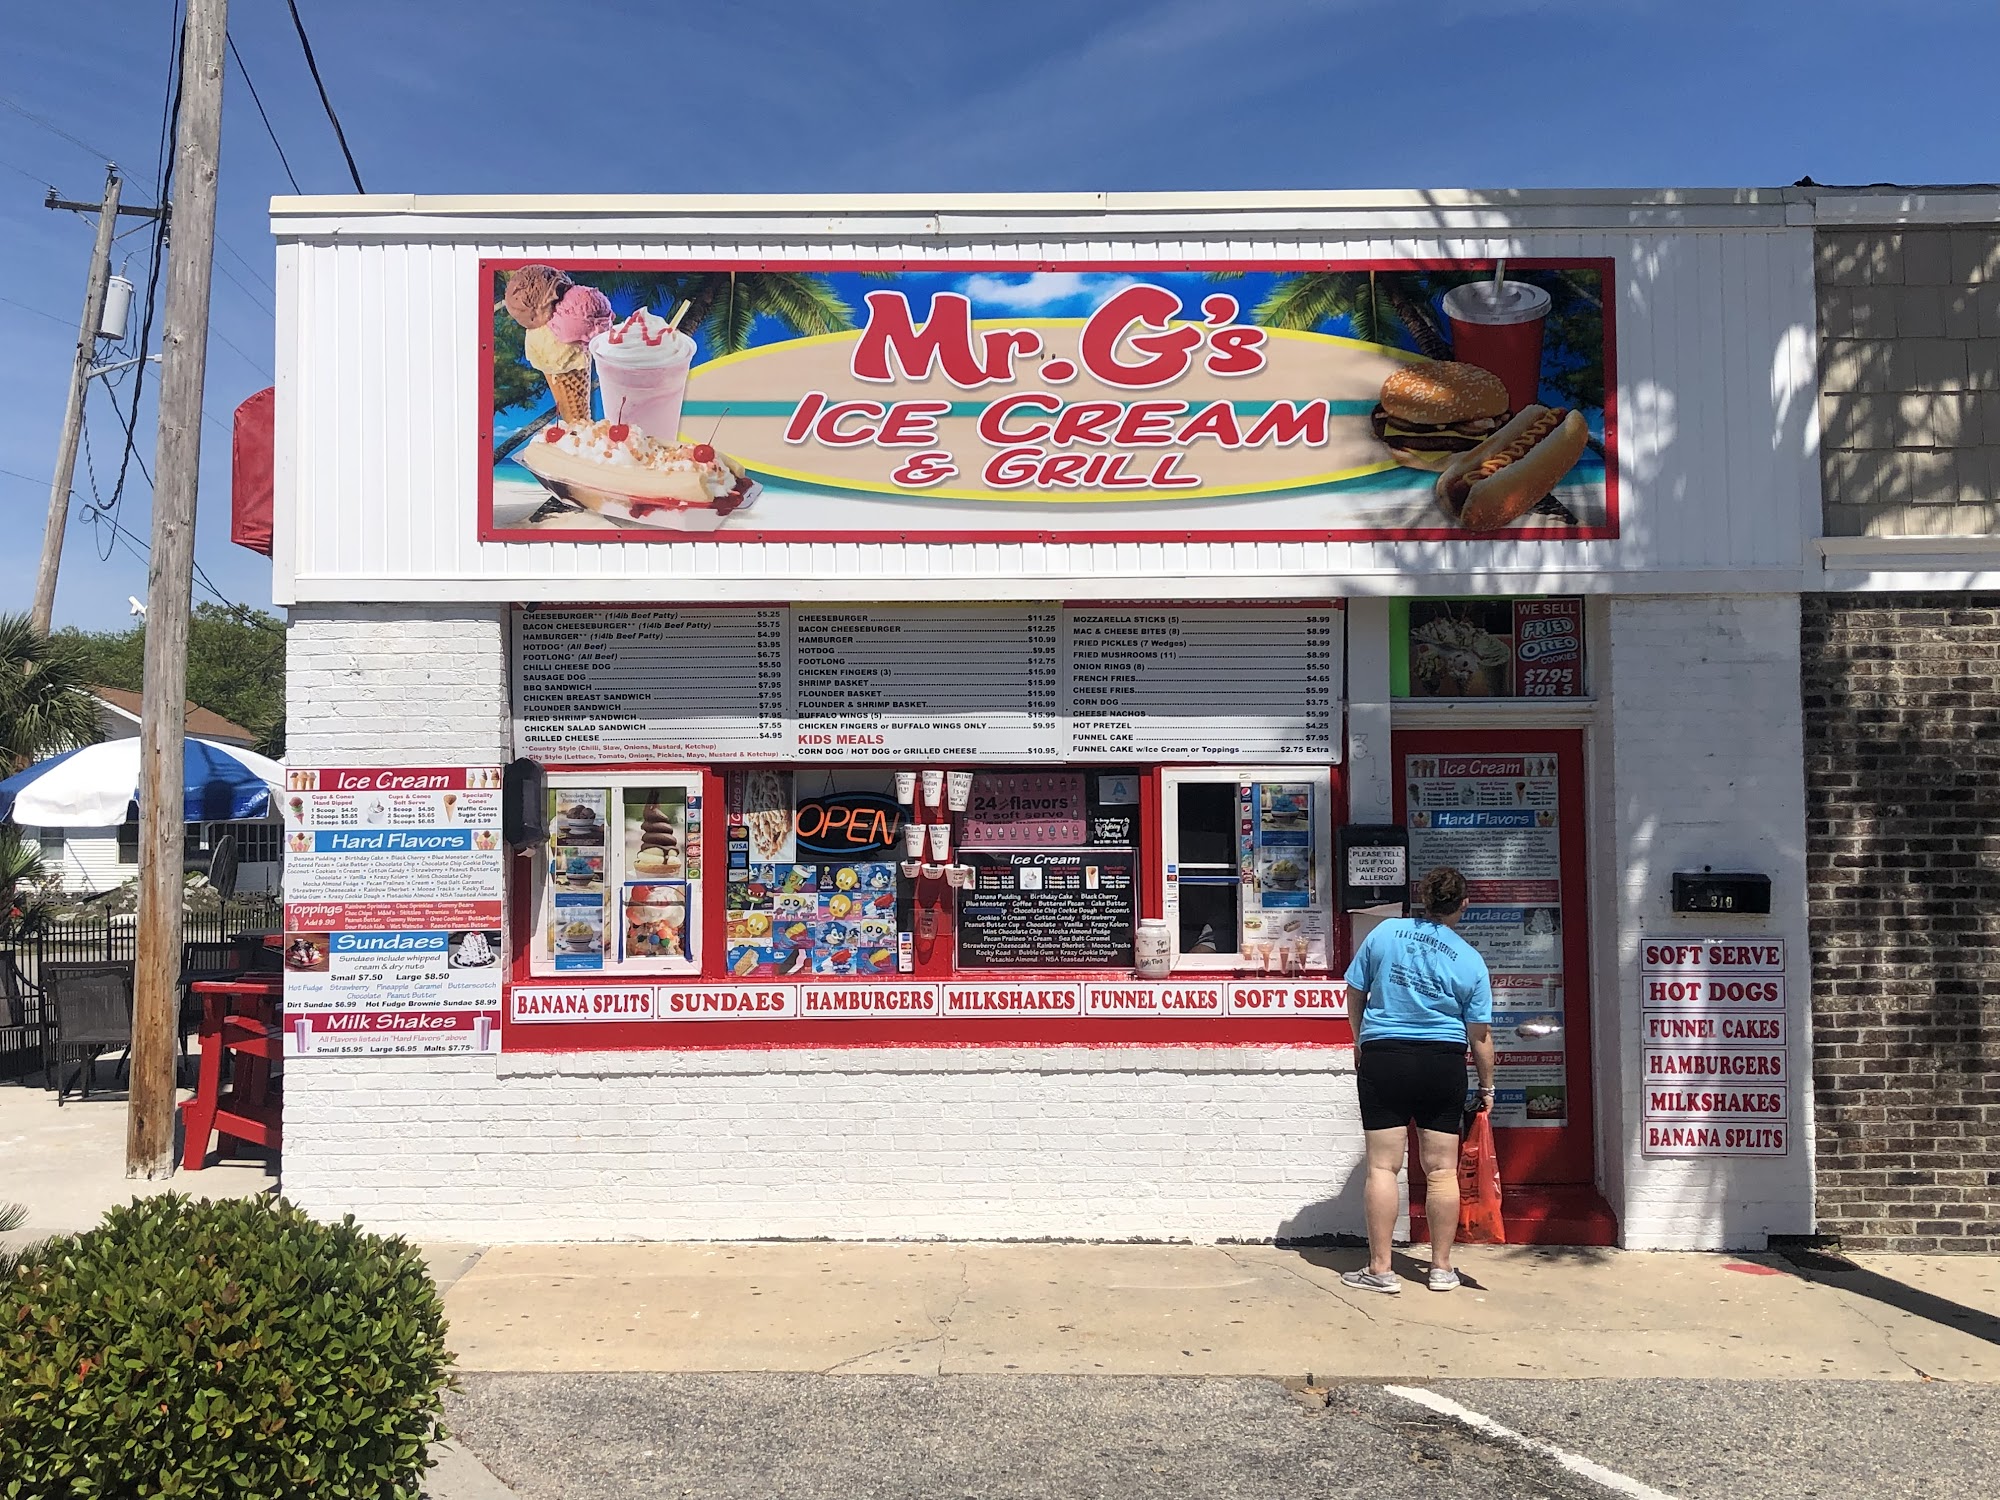 Mr G's Ice Cream & Grill